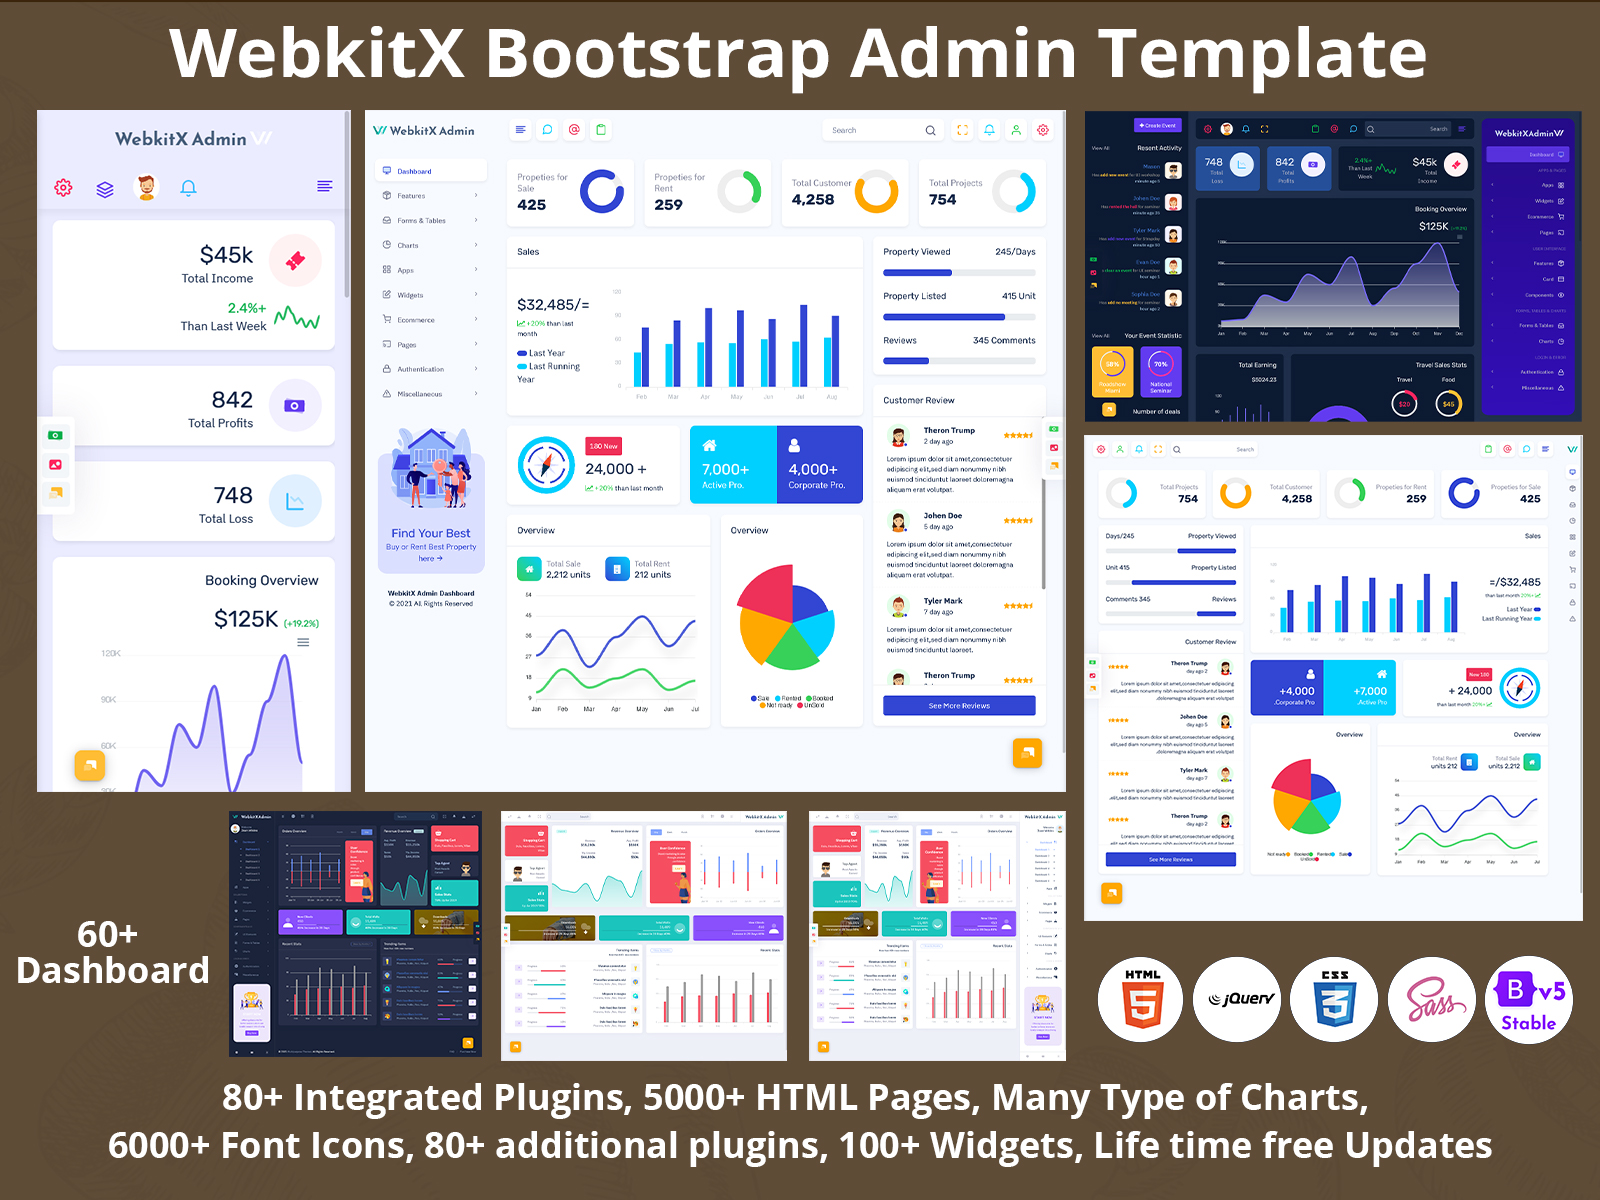 WebkitX Bootstrap Admin Template